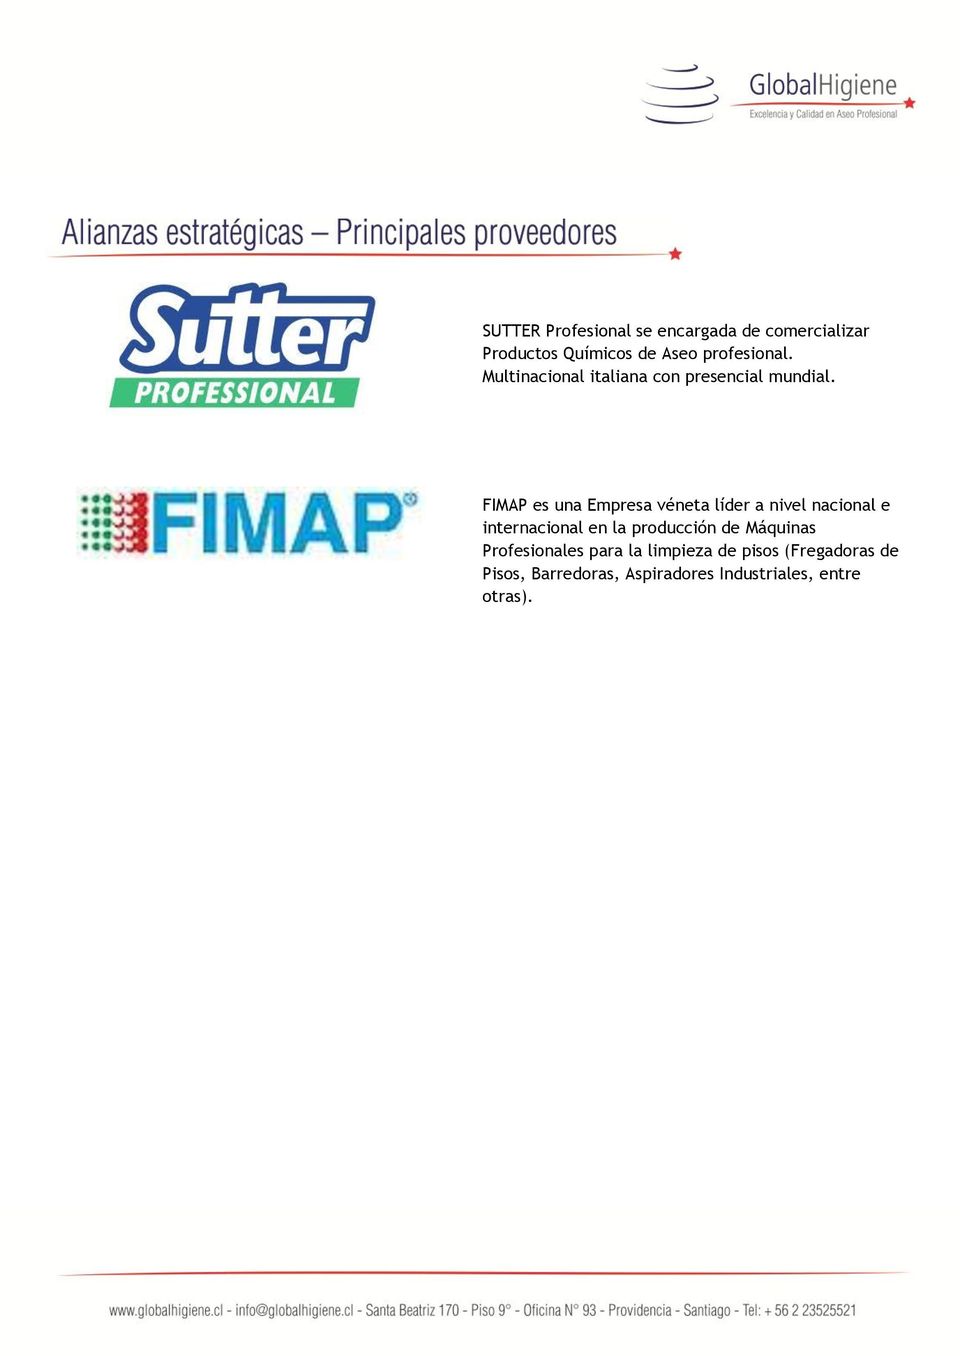 FIMAP es una Empresa véneta líder a nivel nacional e internacional en la producción de